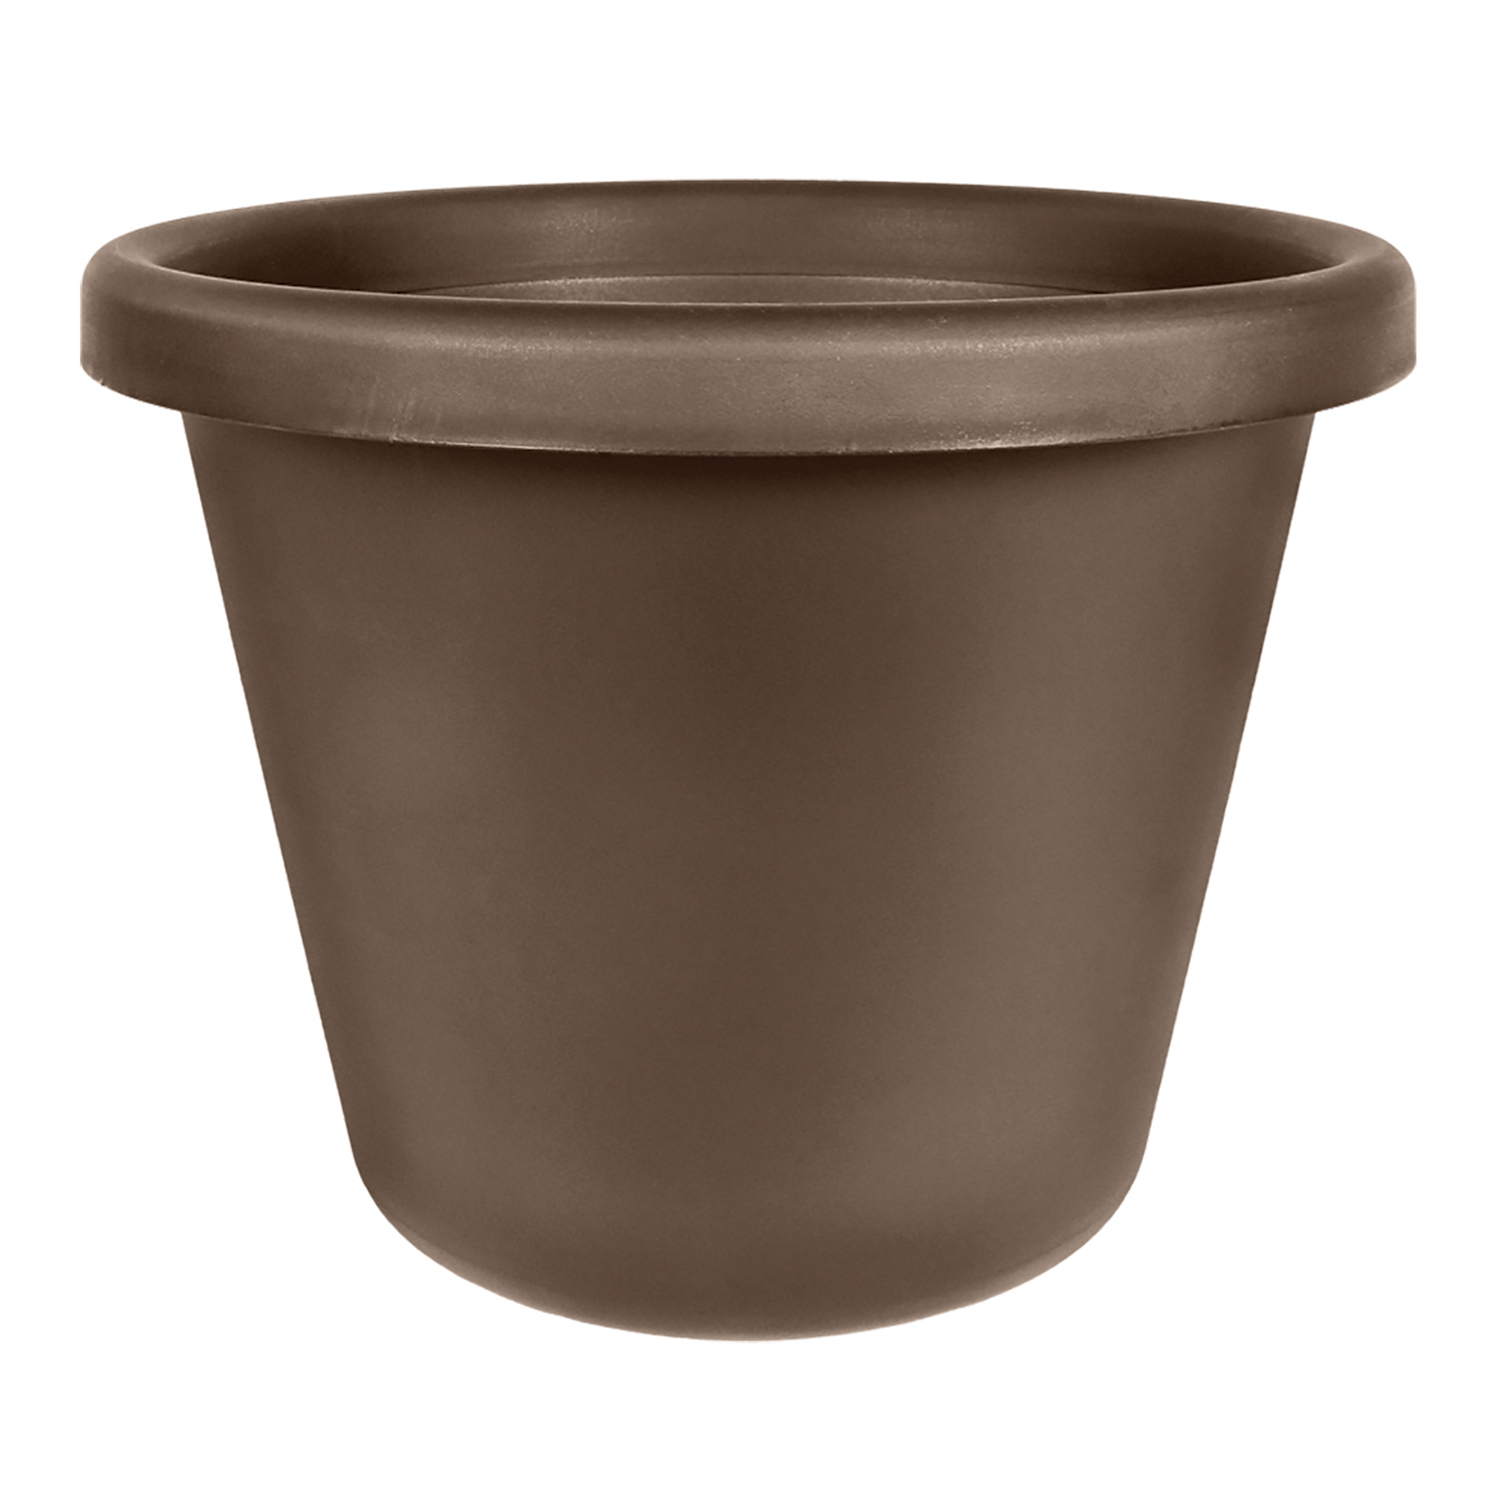 HC Companies 20 Inch Classic Round Plastic Flower Garden Planter Pot, Chocolate - image 1 of 5